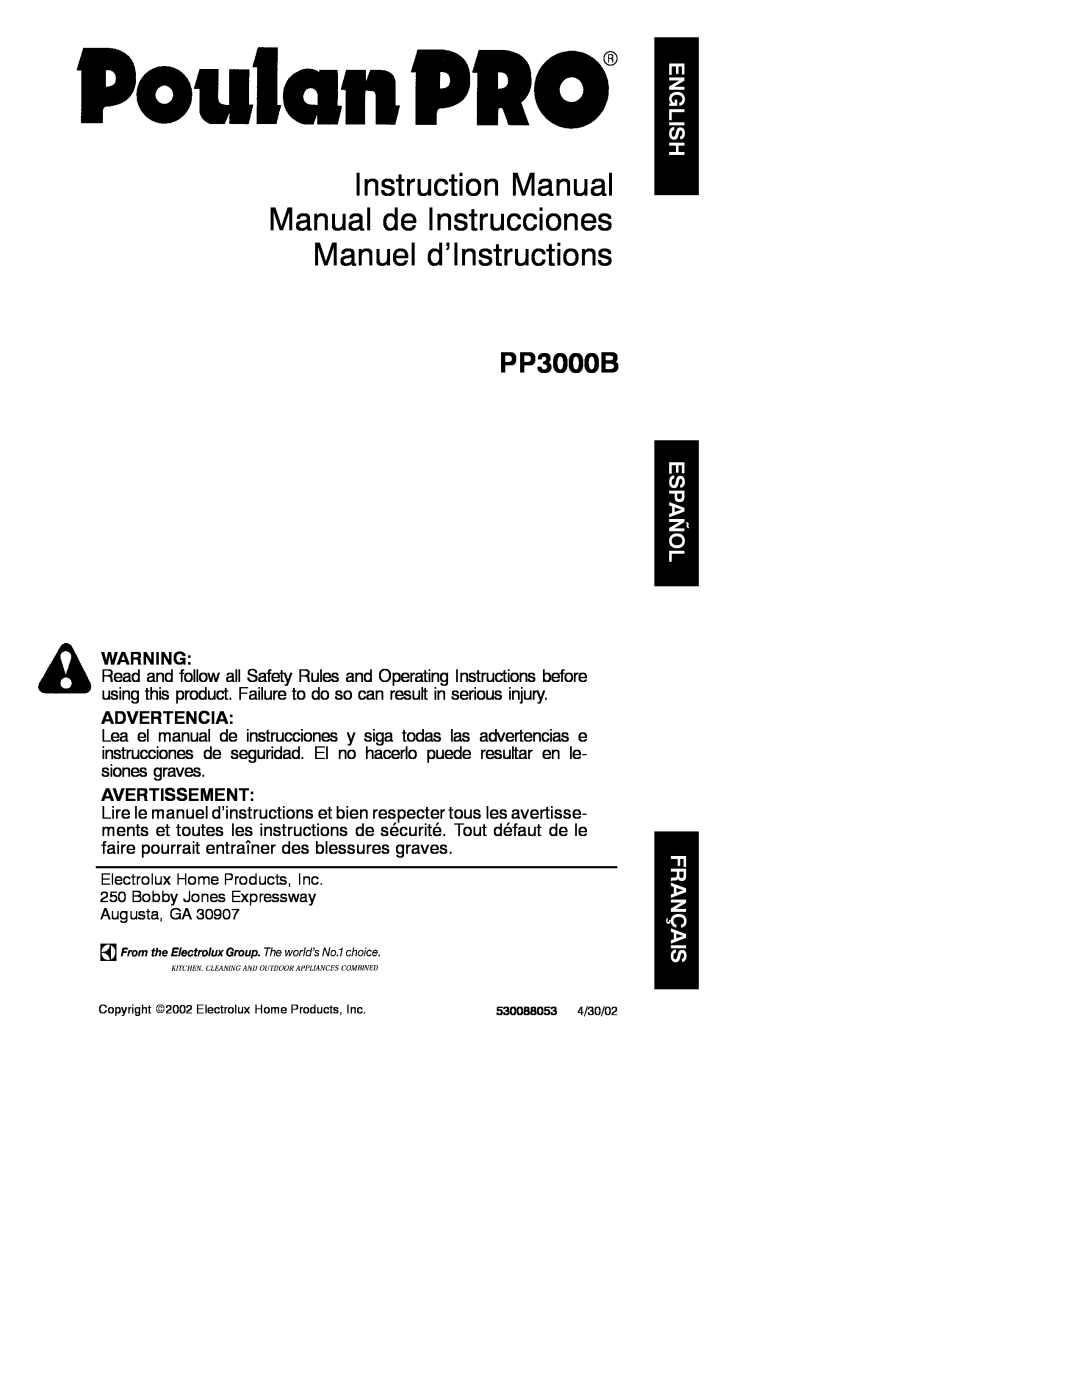 Poulan PP3000B instruction manual Manuel d’Instructions, Advertencia, Avertissement 